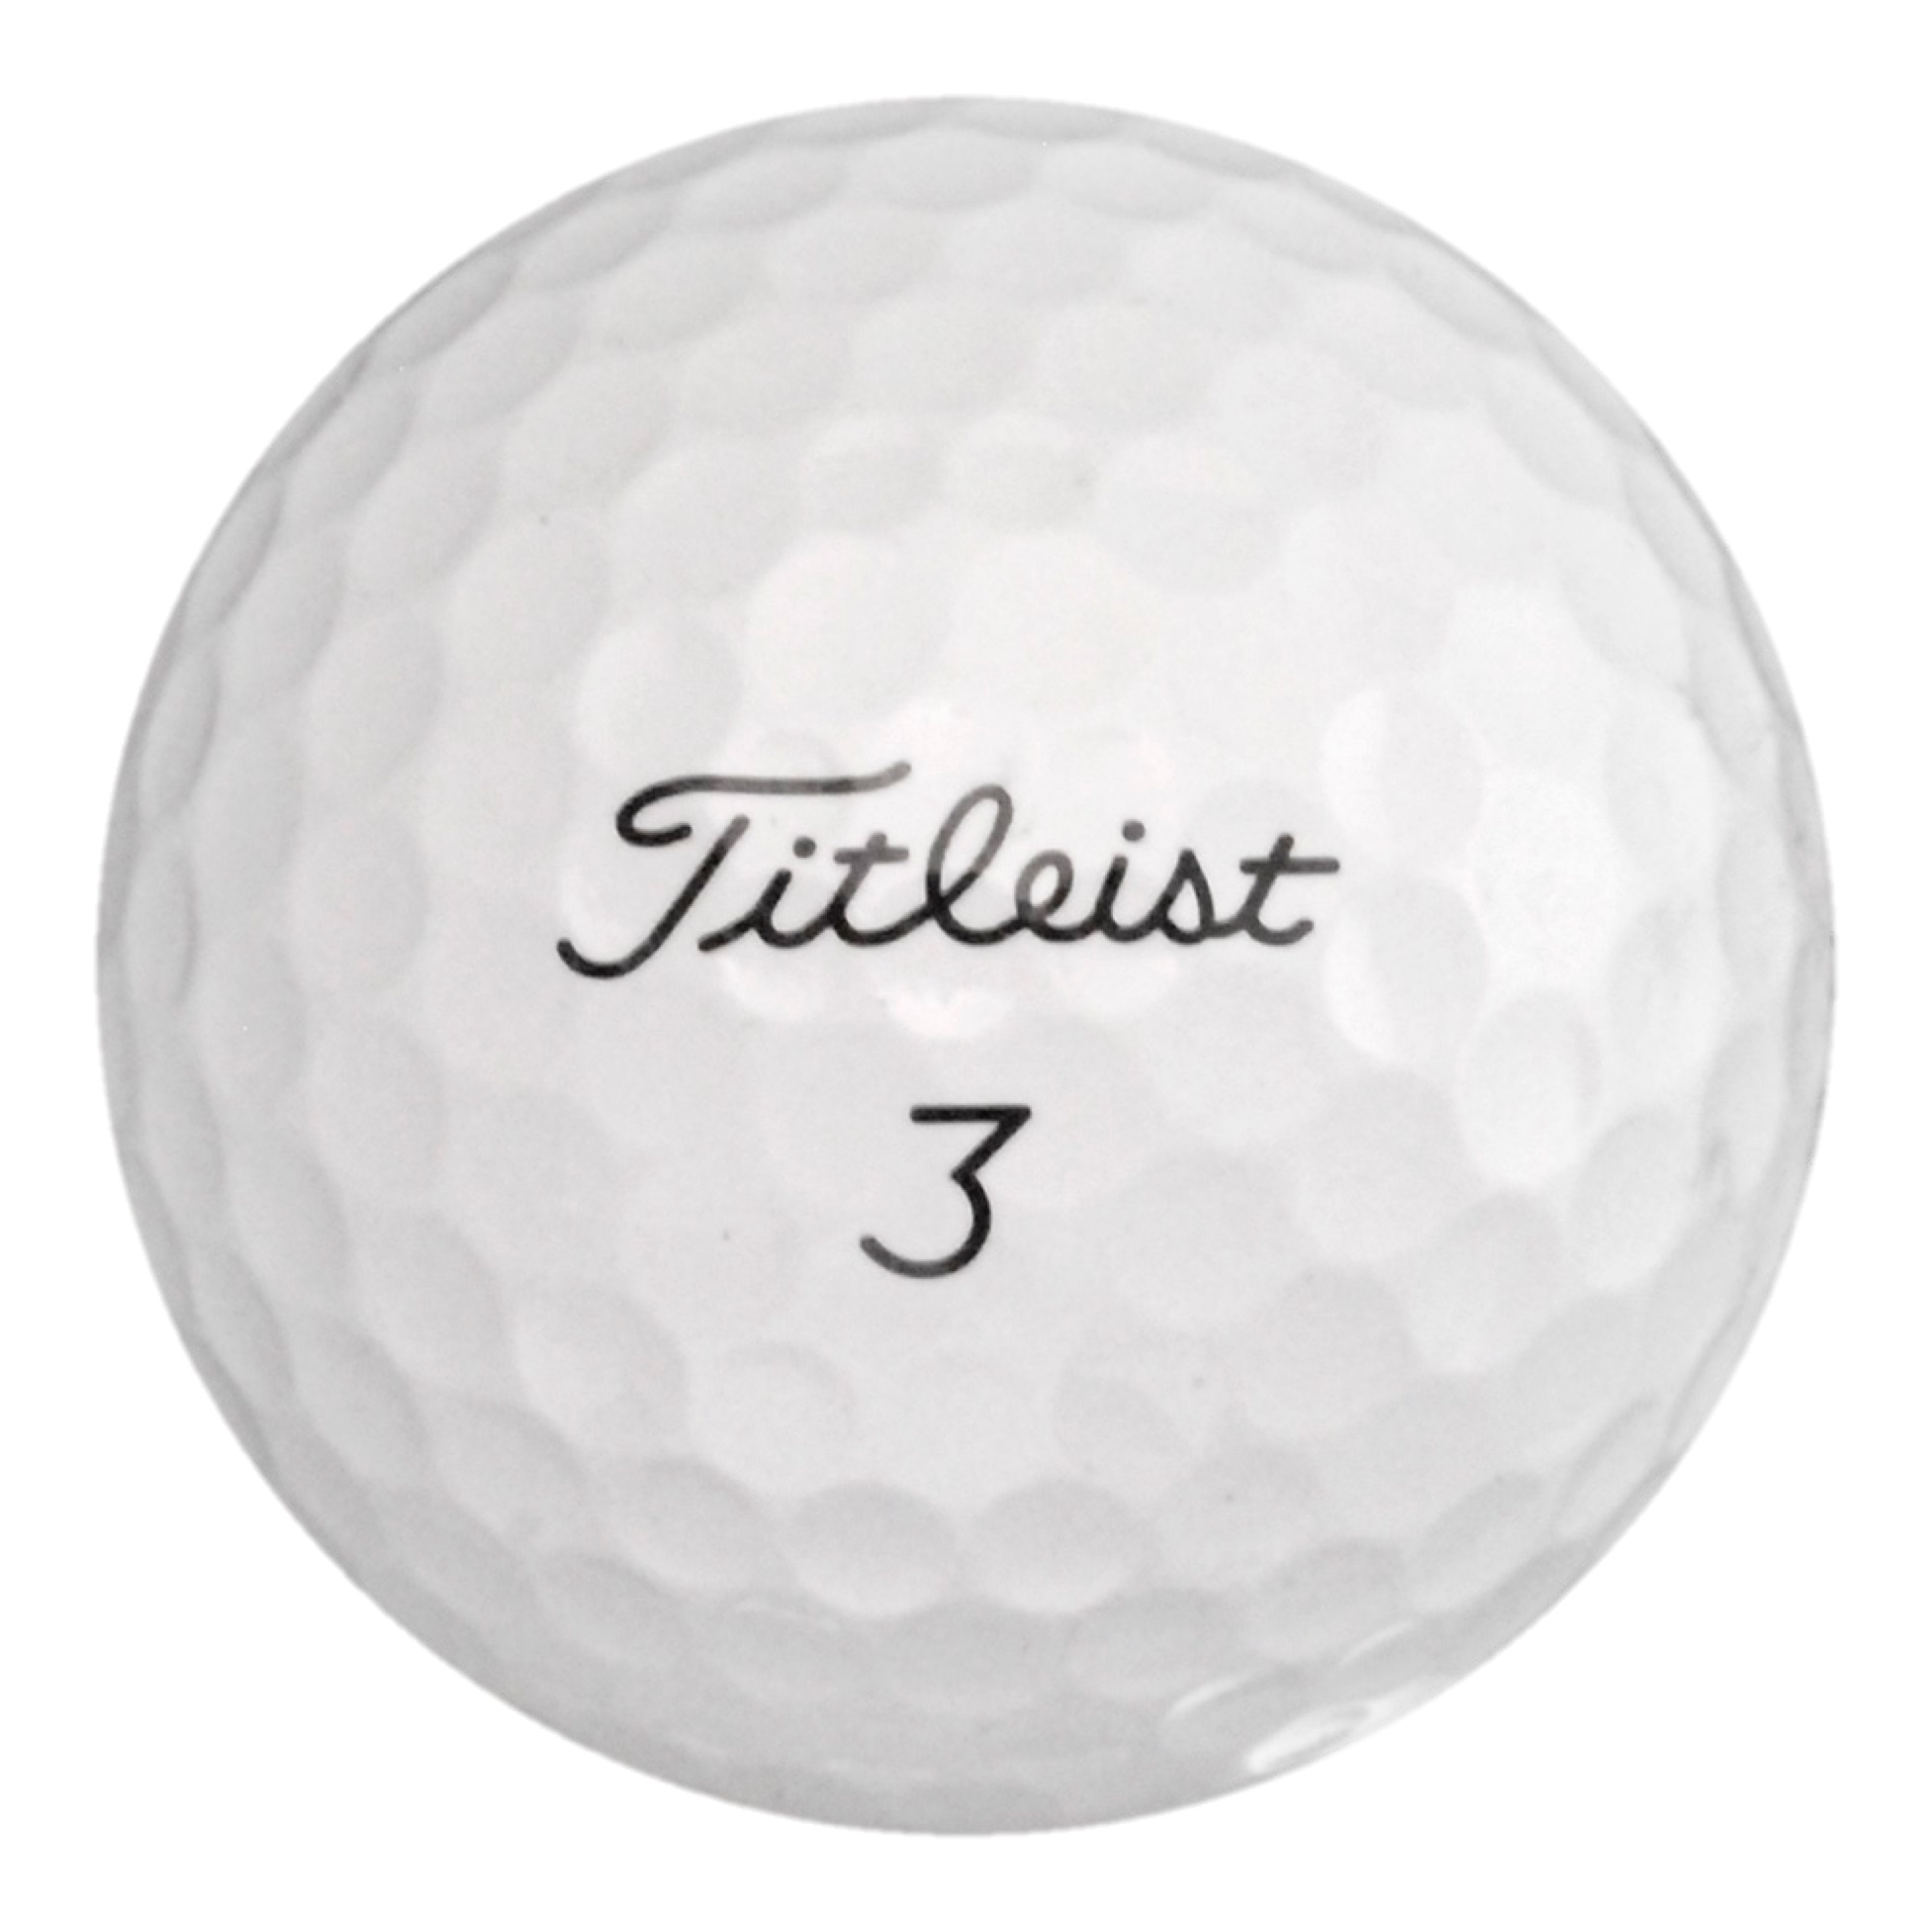 Titleist 2014 Pro V1 Golf Balls, Prior Generation, Used, Good Quality, 48 Pack - image 3 of 3